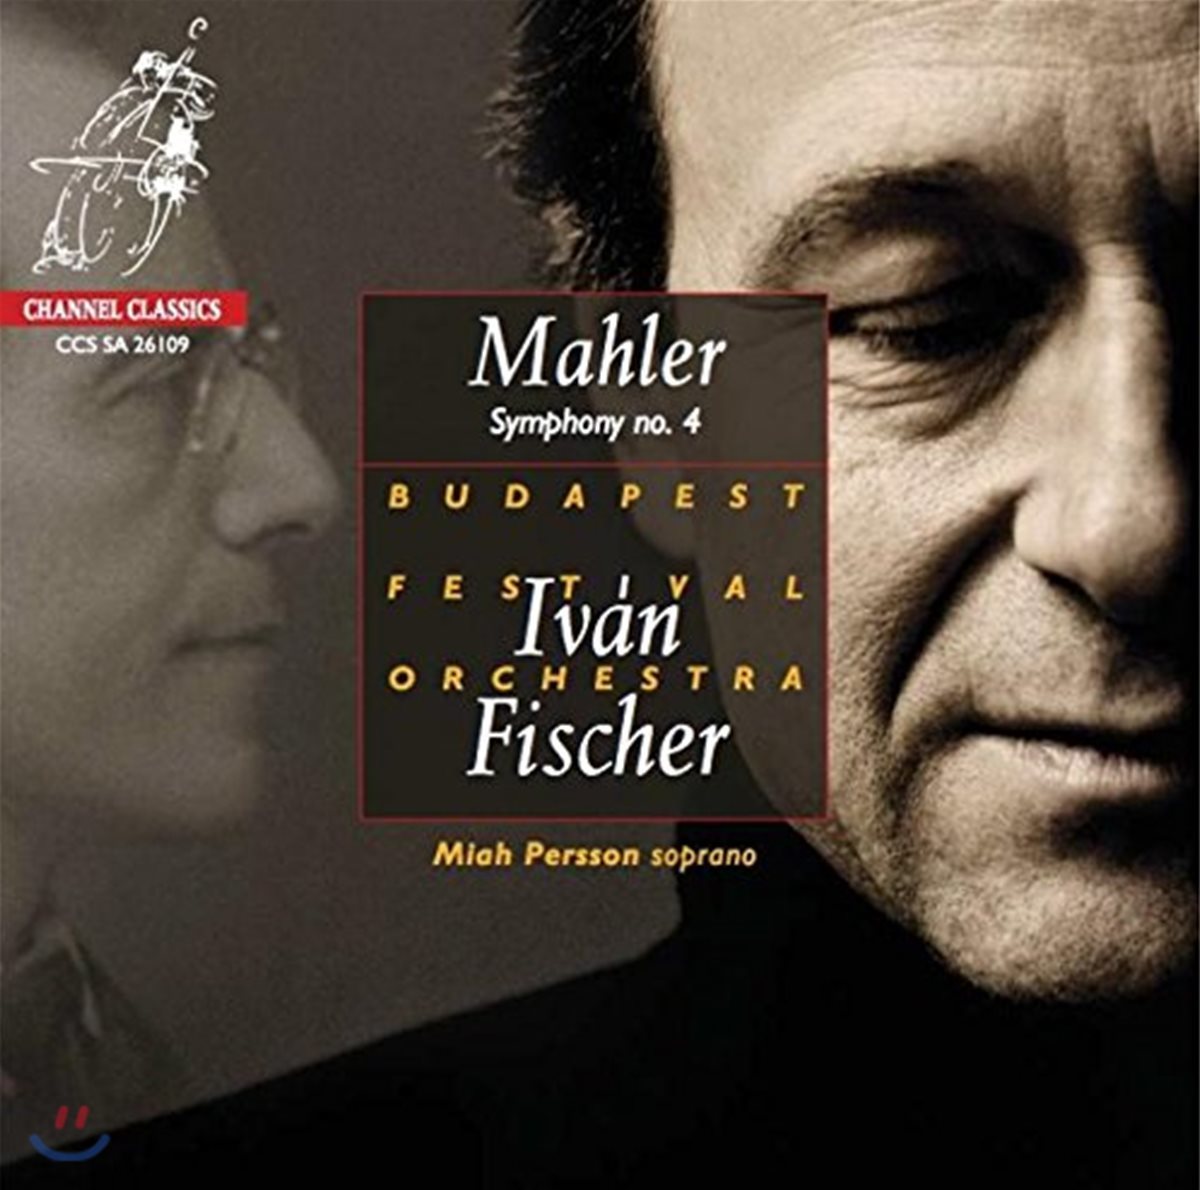 Ivan Fischer 말러: 교향곡 4번 (Gustav Mahler: Symphony No. 4 in G major) 이반 피셔